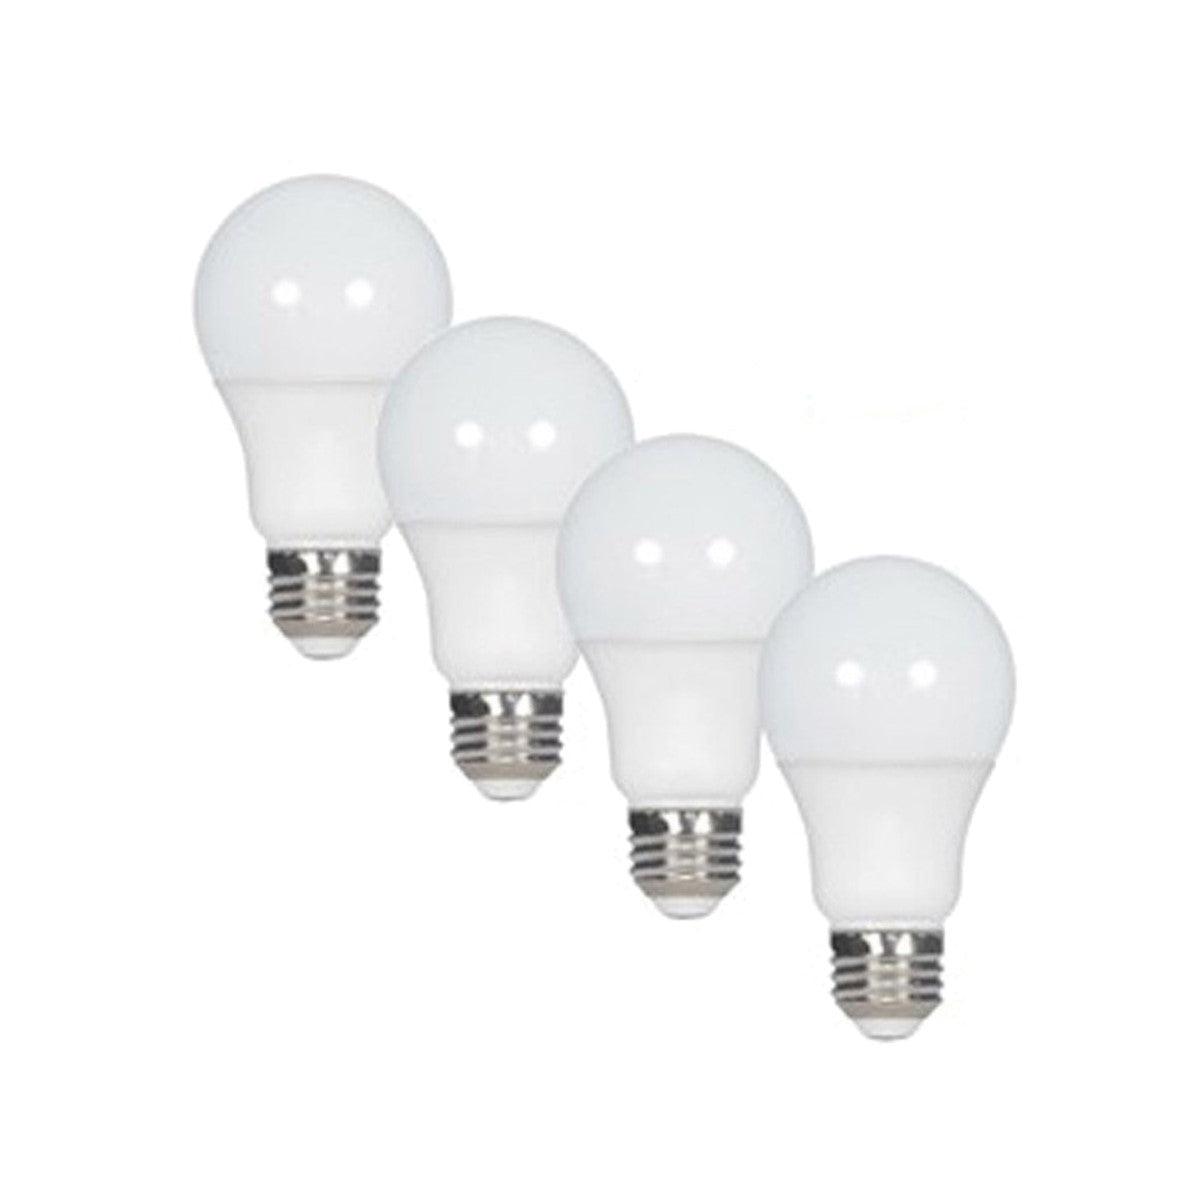 A19 LED Bulb, 100W Equivalent, 16 Watt, 1490 Lumens, 2700K, E26 Medium Base, Frosted Finish, Pack Of 4